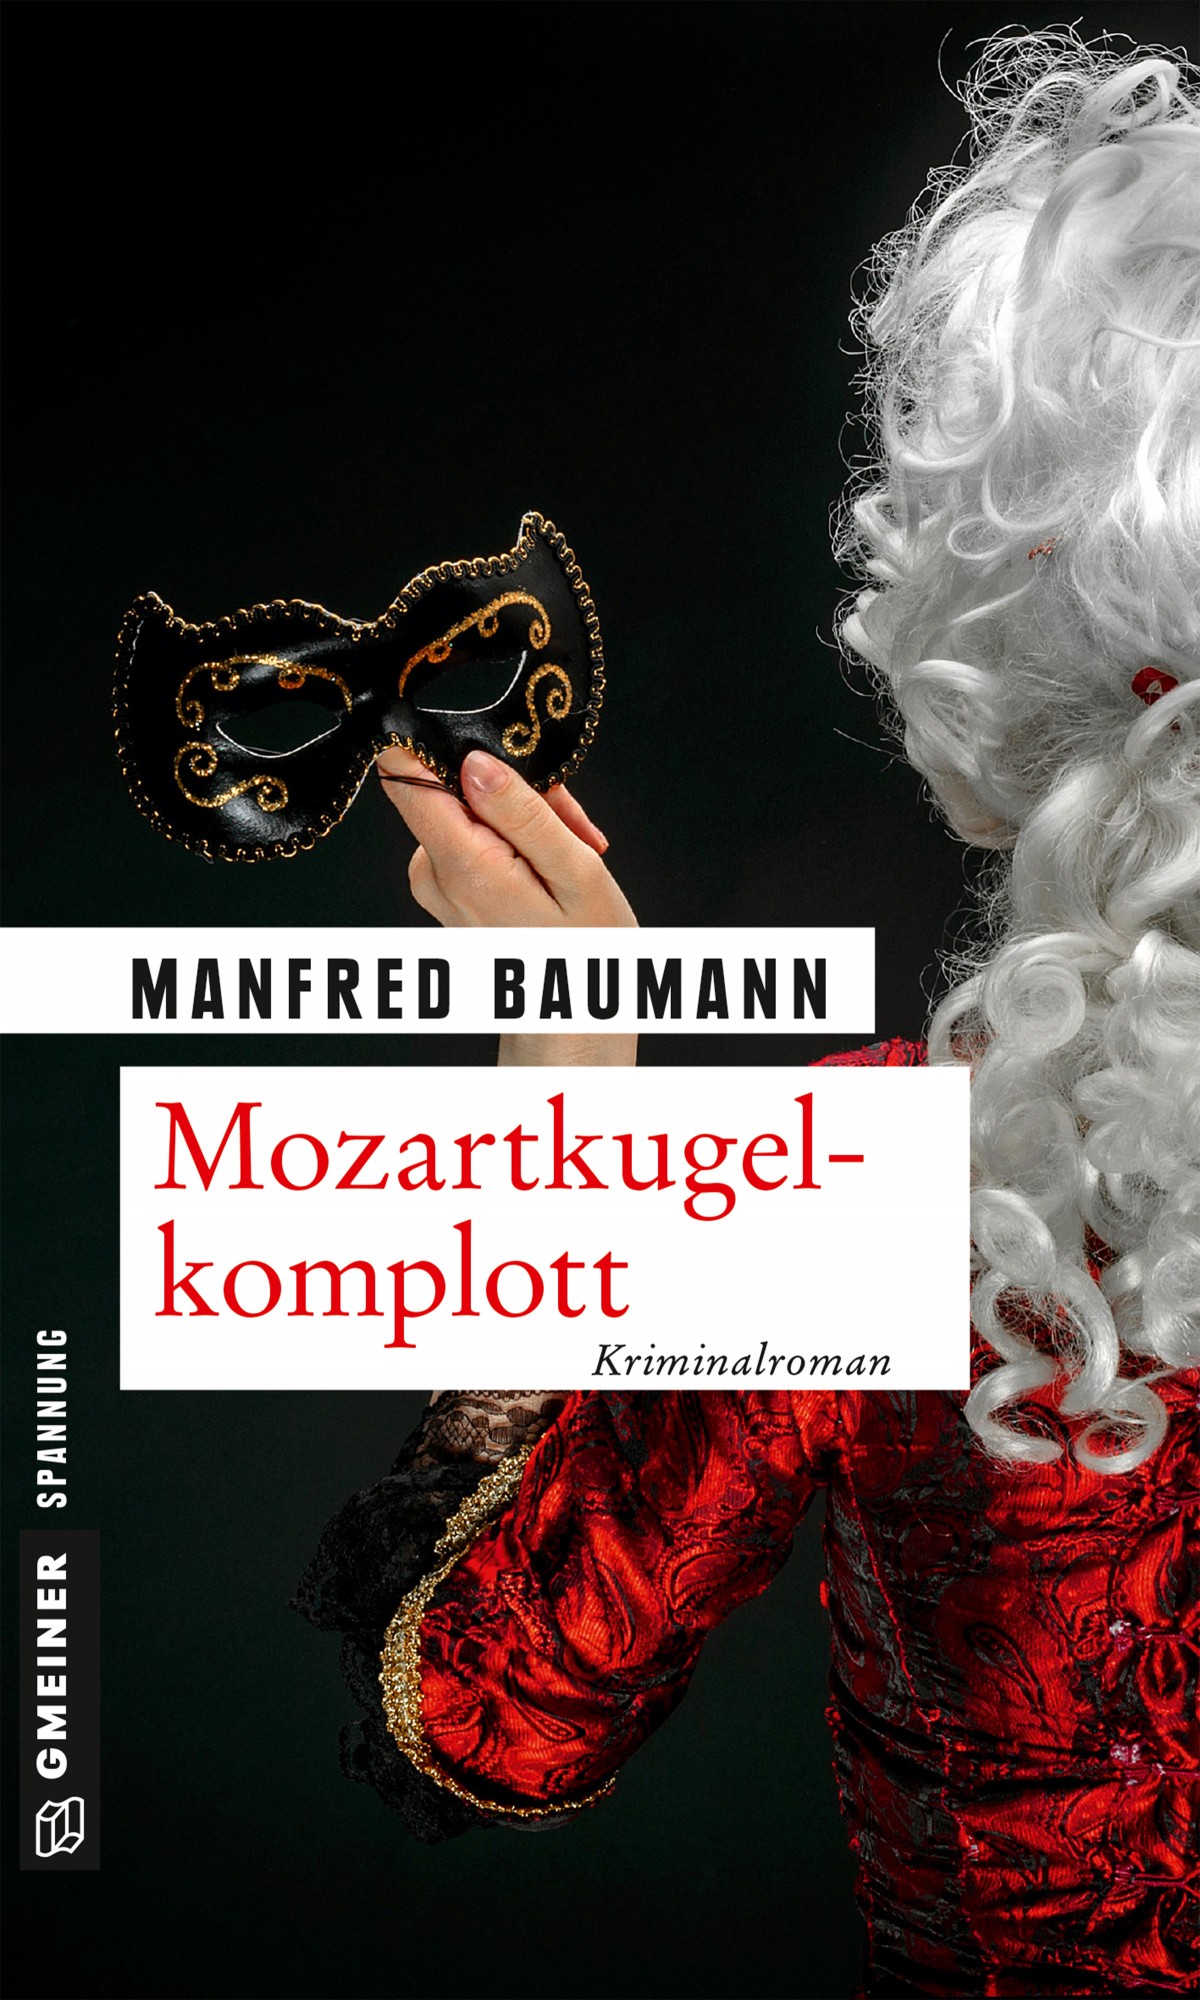 Mozartkugelkomplott